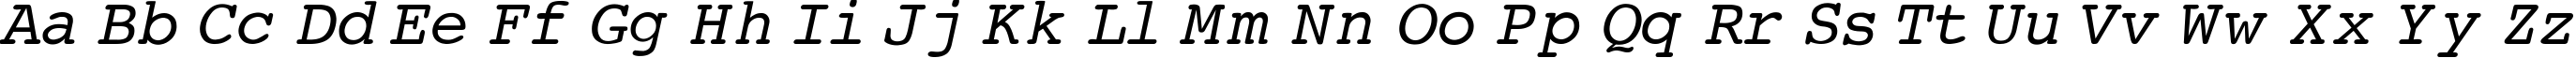 Пример написания английского алфавита шрифтом Courier-Normal-Italic